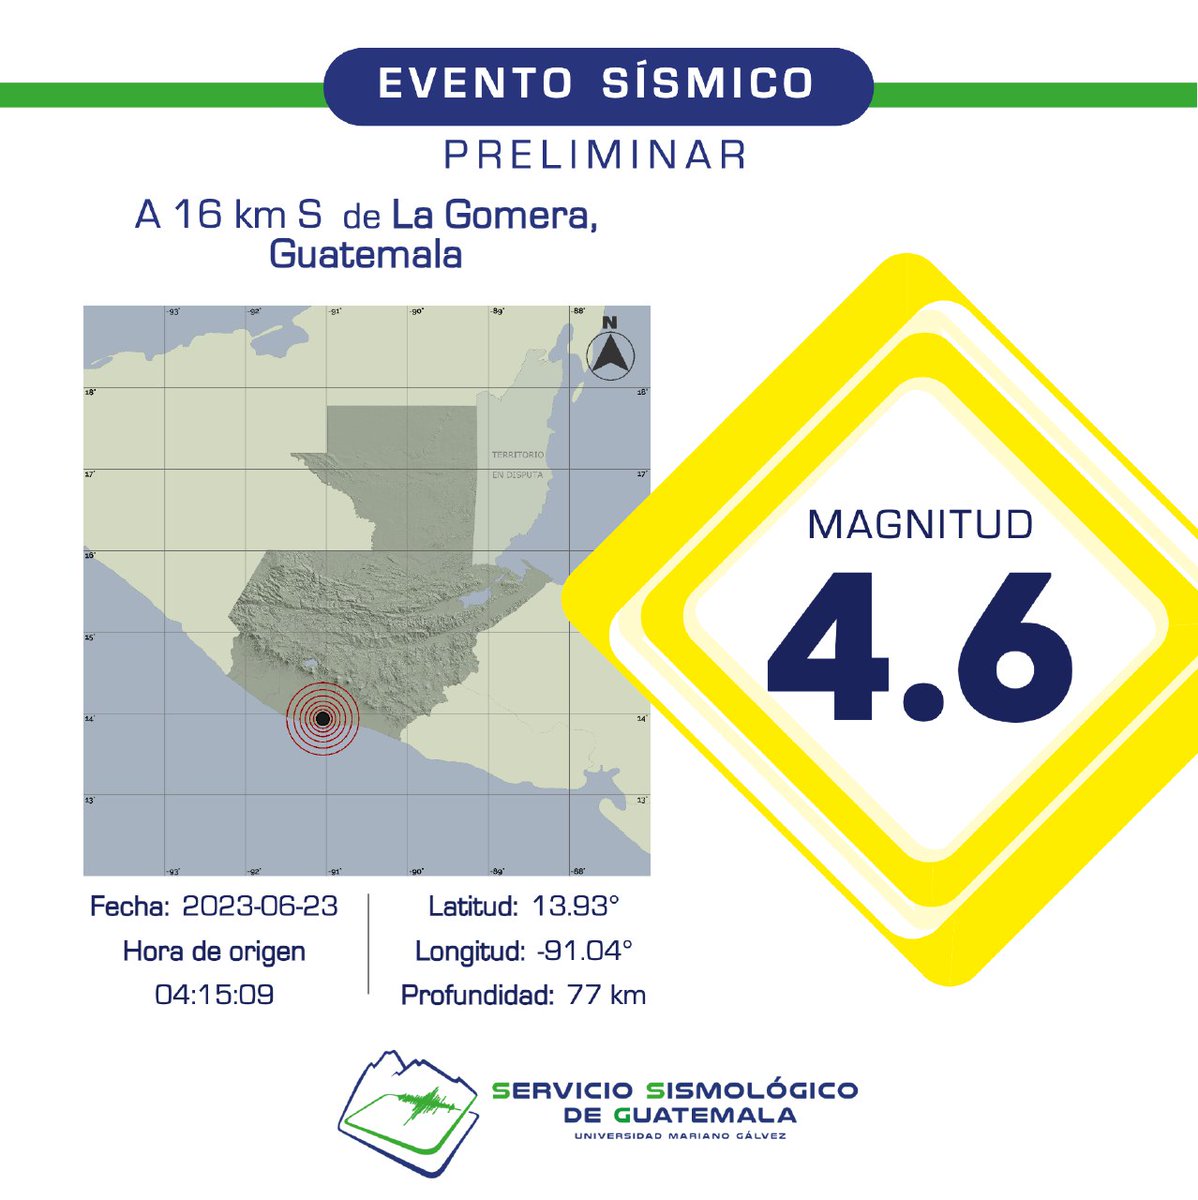 PRELIMINAR
Sismo registrado a 16 km S de La Gomera, Guatemala. #Temblor #TemblorGT #Sismo #SismoGT